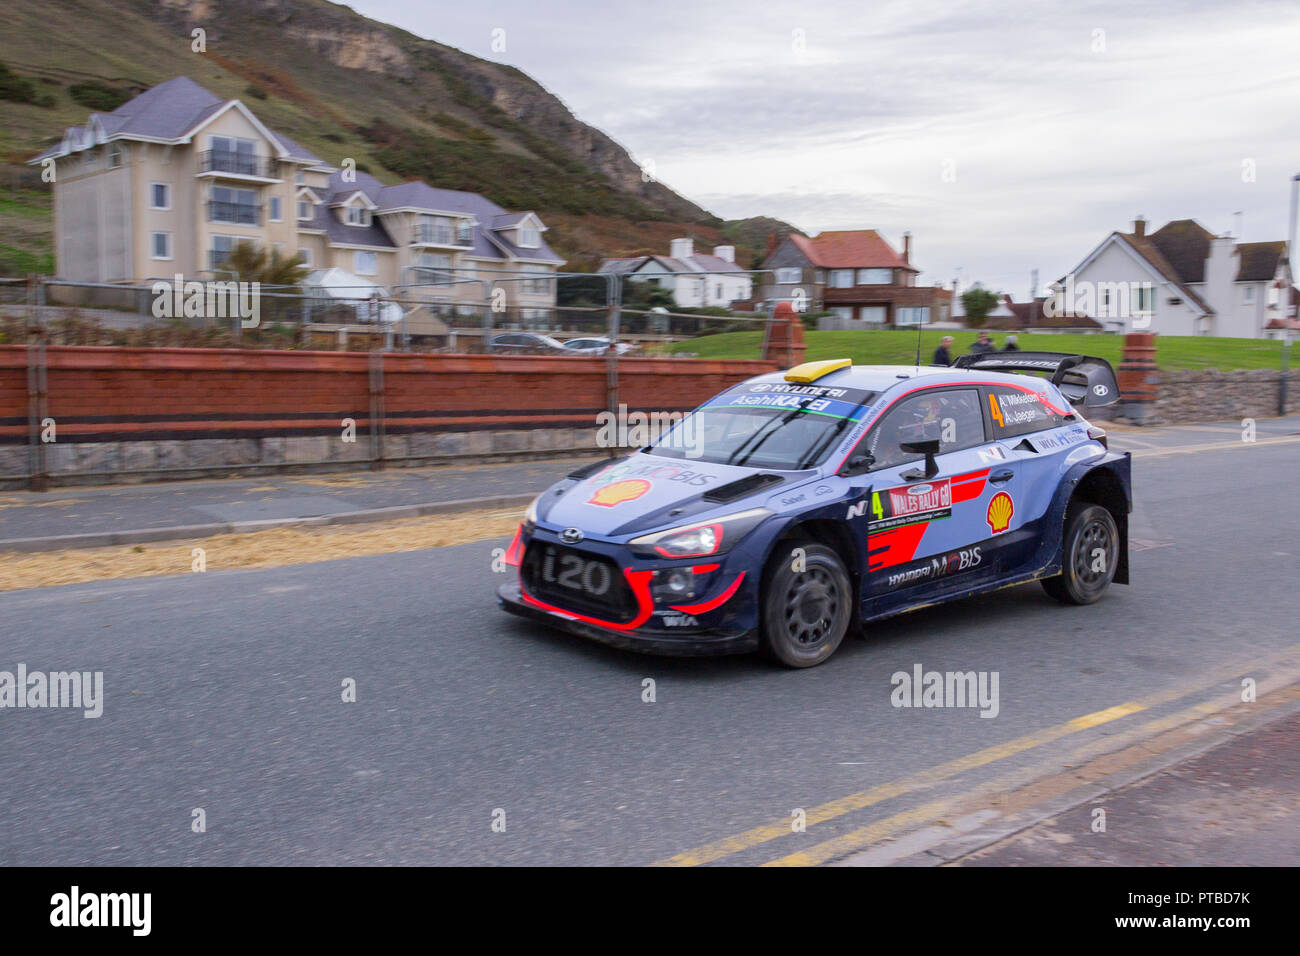 Wales Rally GB, Llandudno, Great Orme. Oktober 7, 2018. Team. 1, Sébastien Ogier Stockfoto